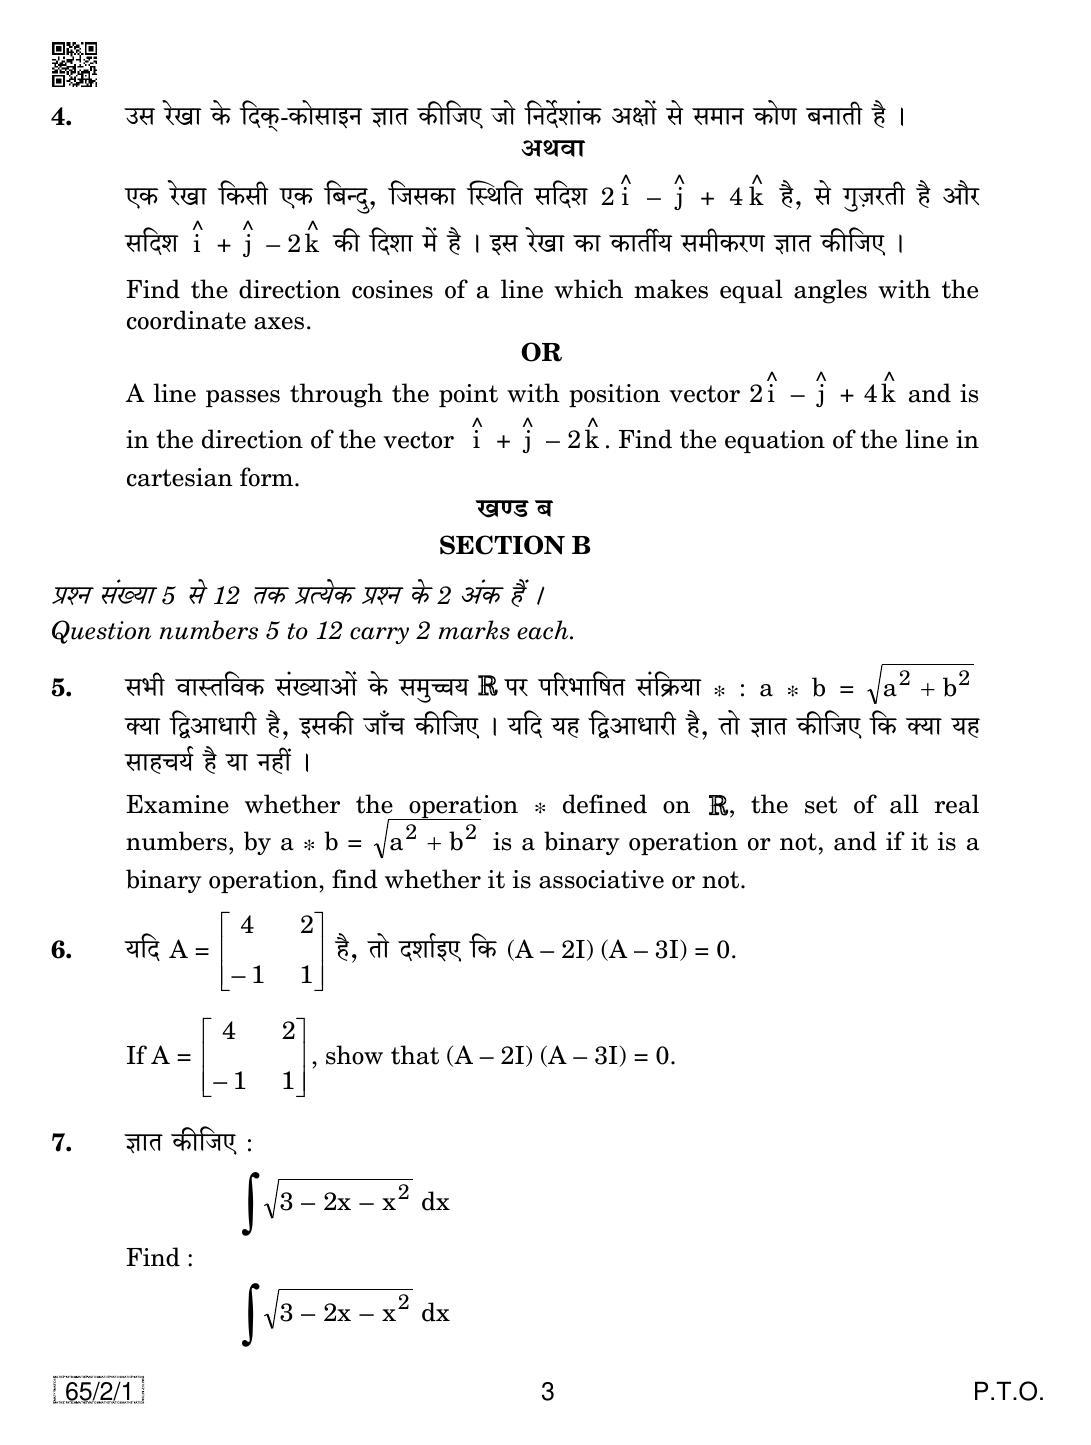 CBSE Class 12 65-2-1 Mathematics 2019 Question Paper - Page 3